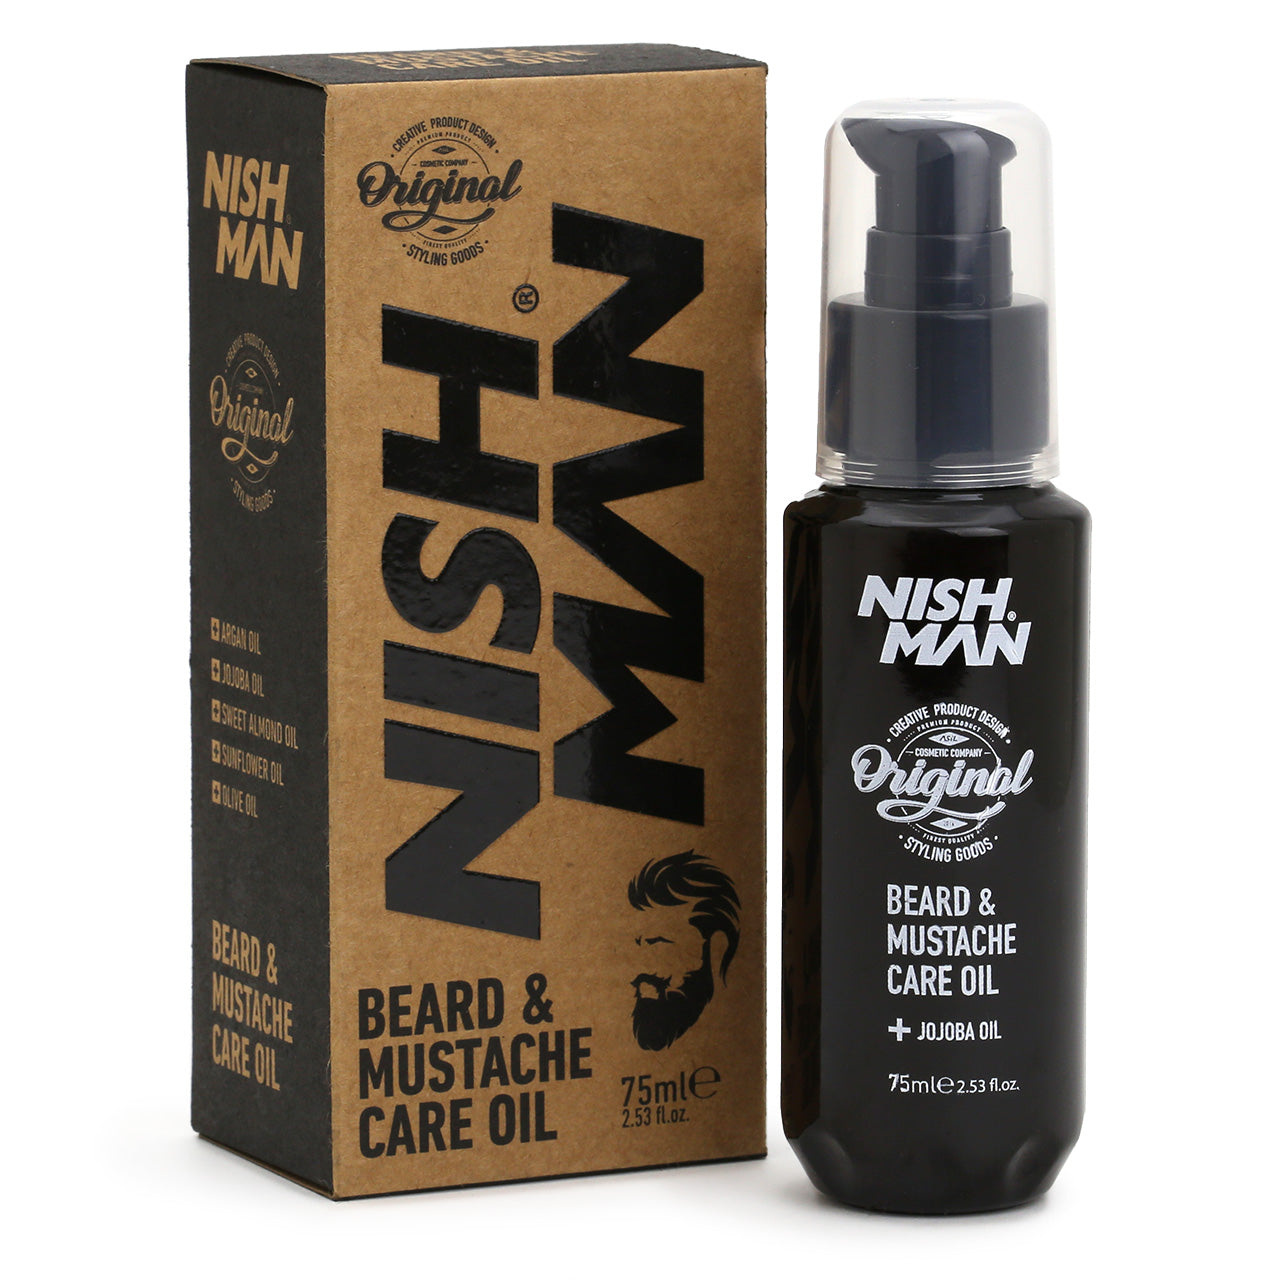 NishMan Beard & Mustache Care Oil 75ml bottle and kraft packaging